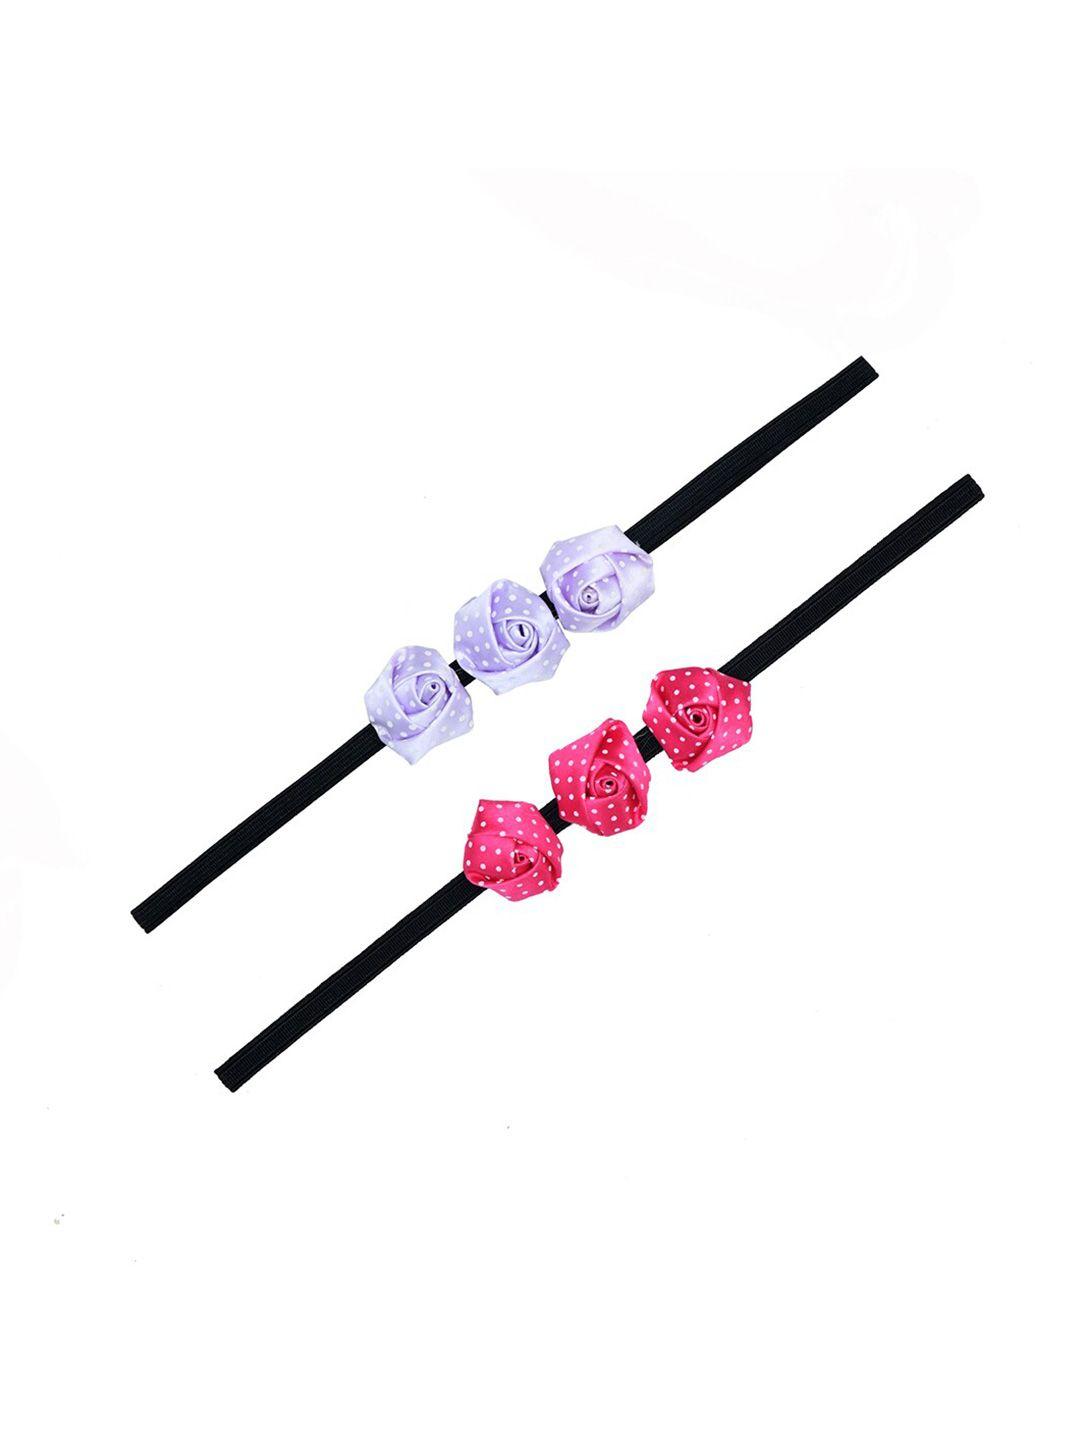 funkrafts girls pink & purple set of 2 ponytail holders